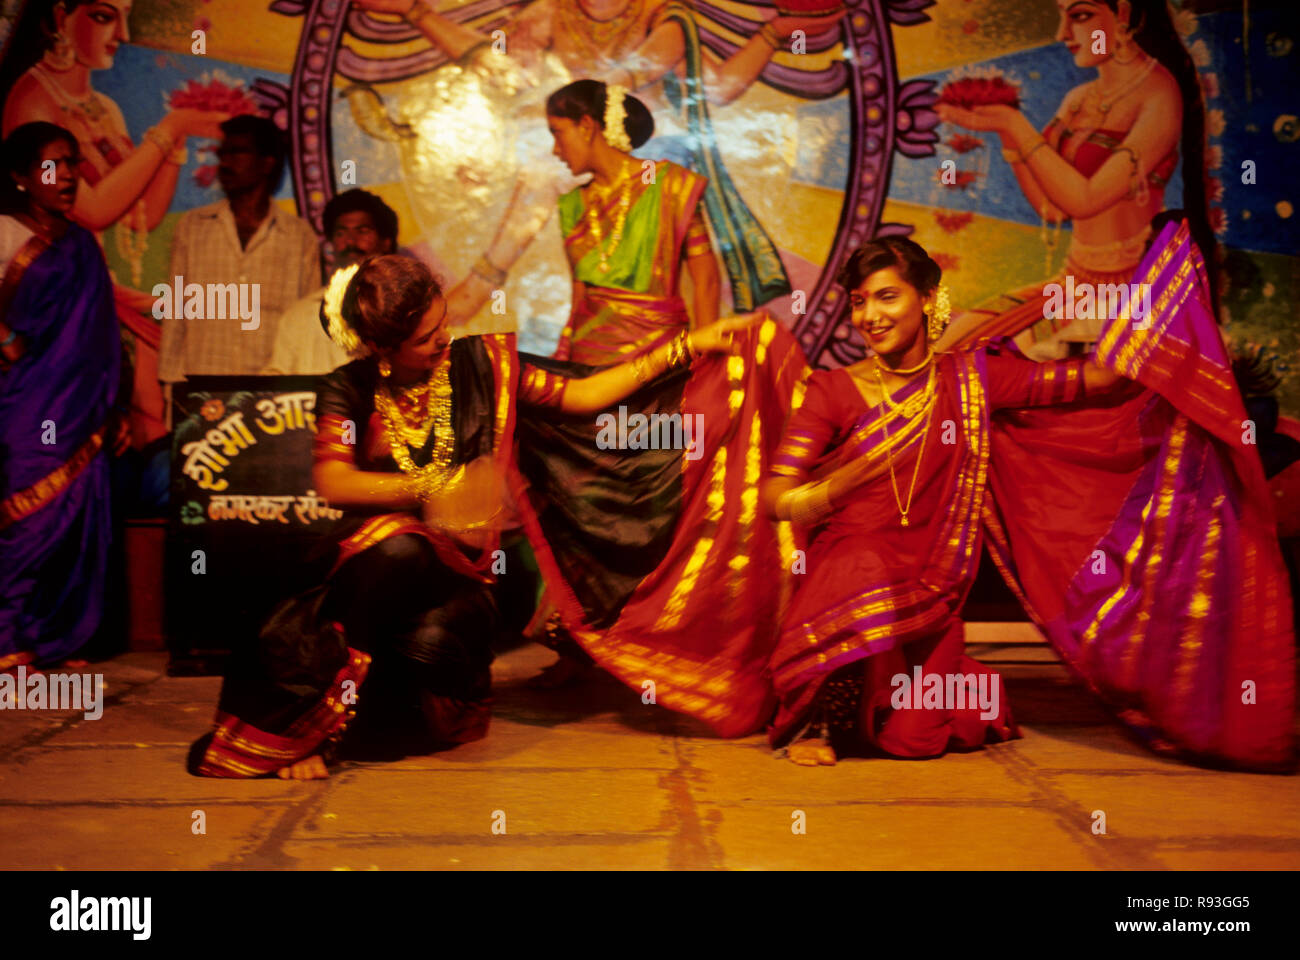 Les femmes qui exécutent la danse folklorique, modnib lavani, Mumbai, Maharashtra, Inde Banque D'Images